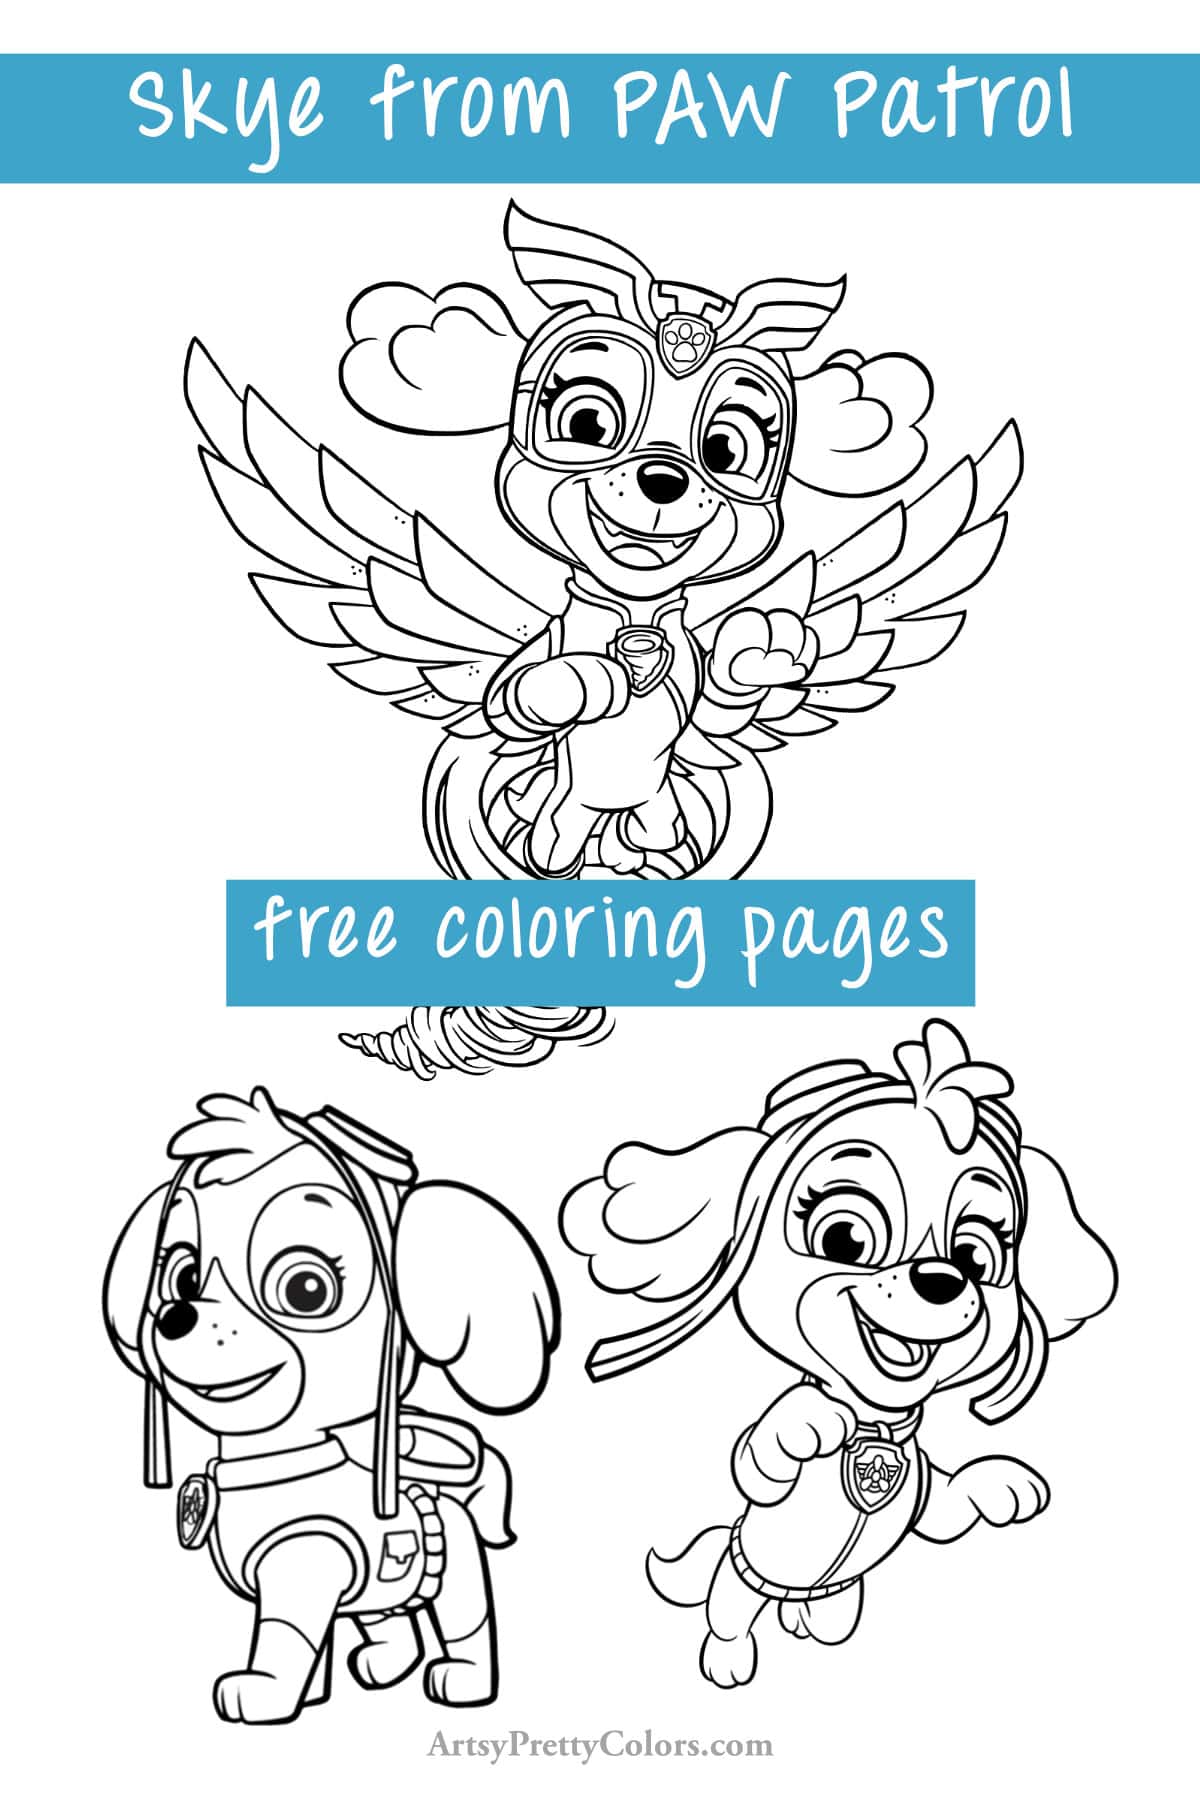 Cute paw patrol skye coloring pages free